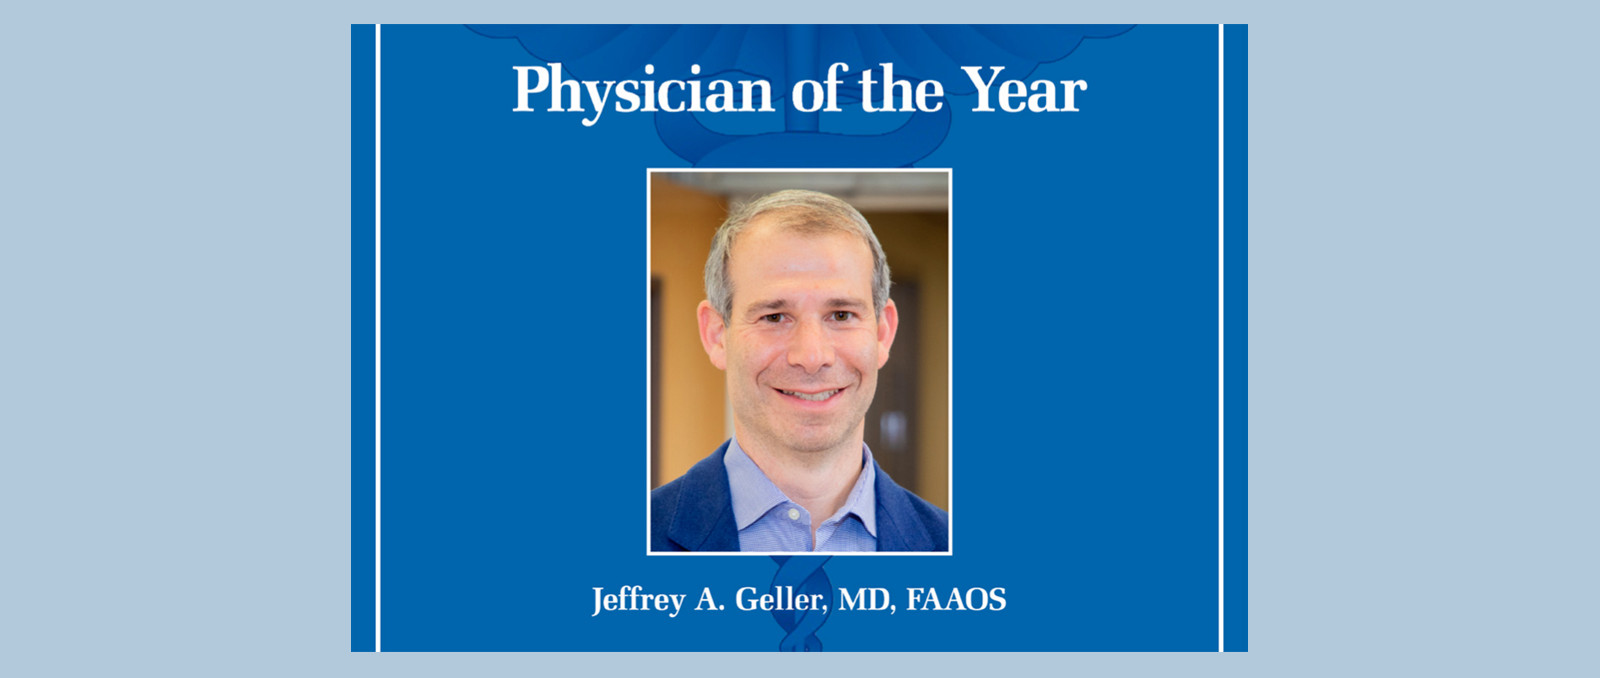 Jeffrey A. Geller, MD - Physician of the Year Award by NewYork-Presbyterian